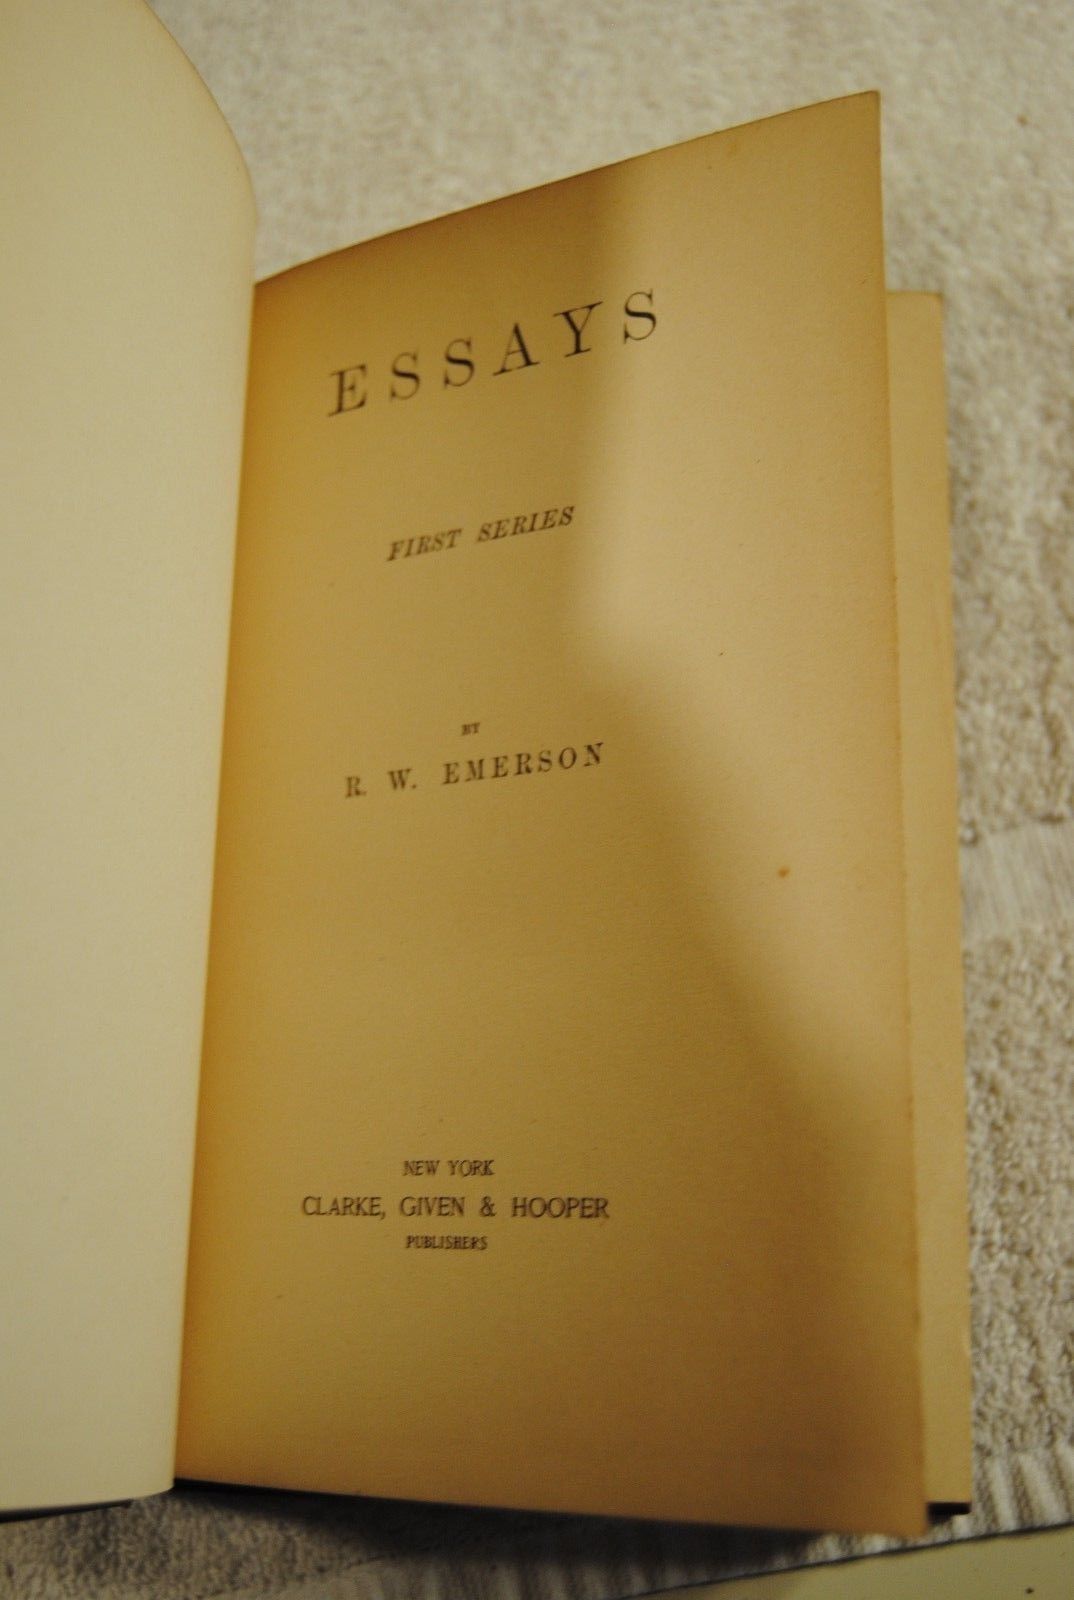 emerson essay titles